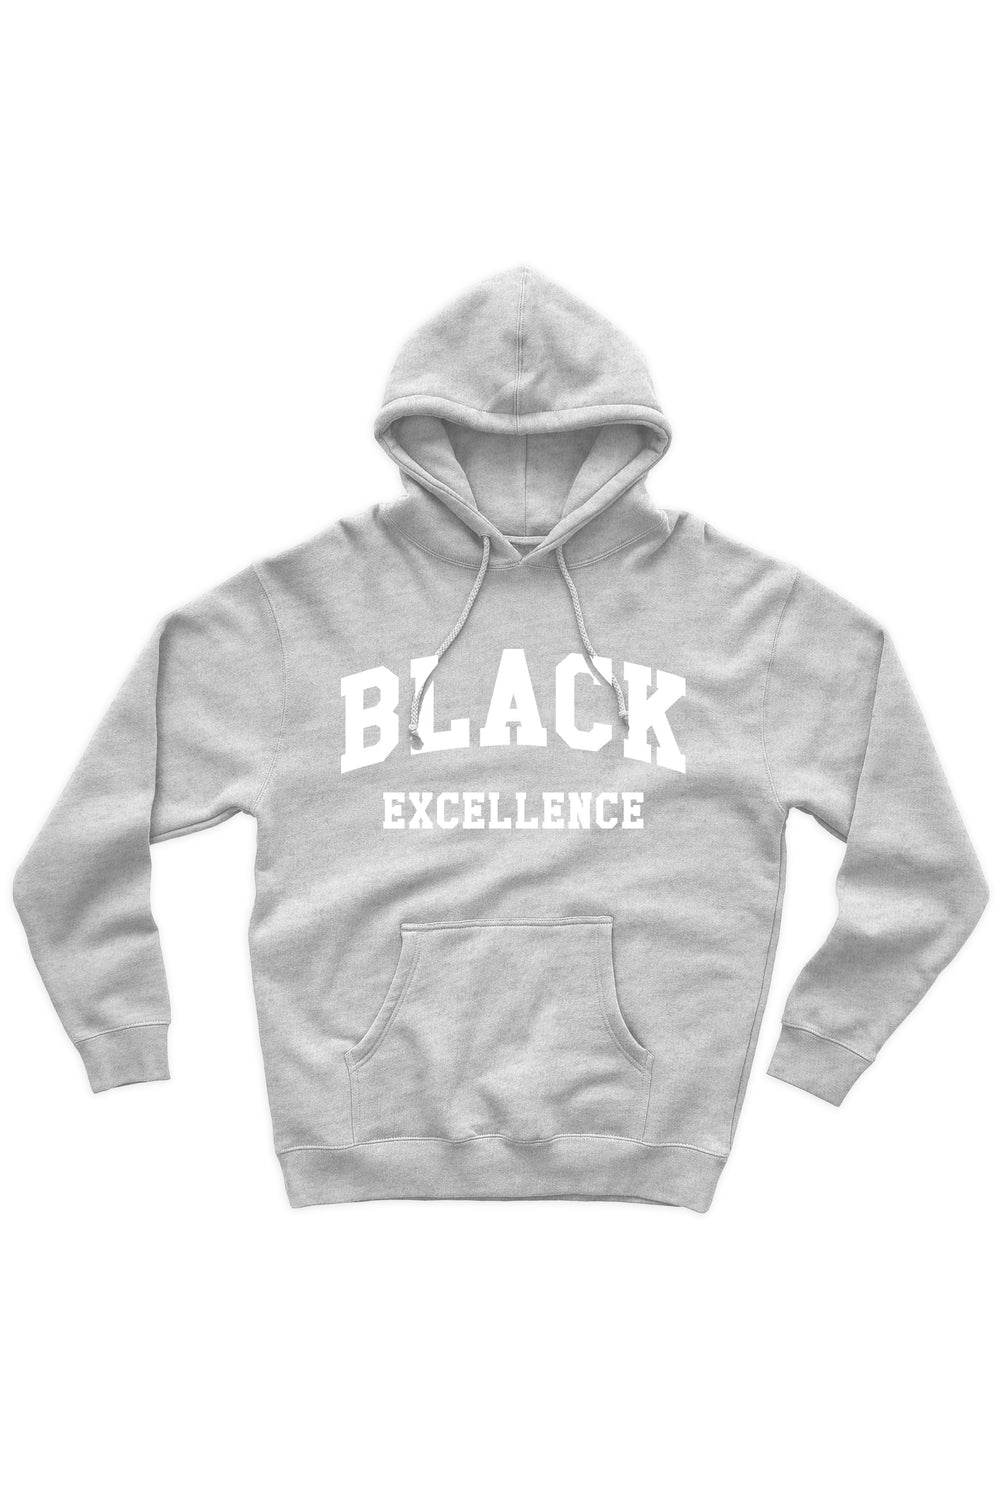 Black Excellence Hoodie (White Logo) - Zamage